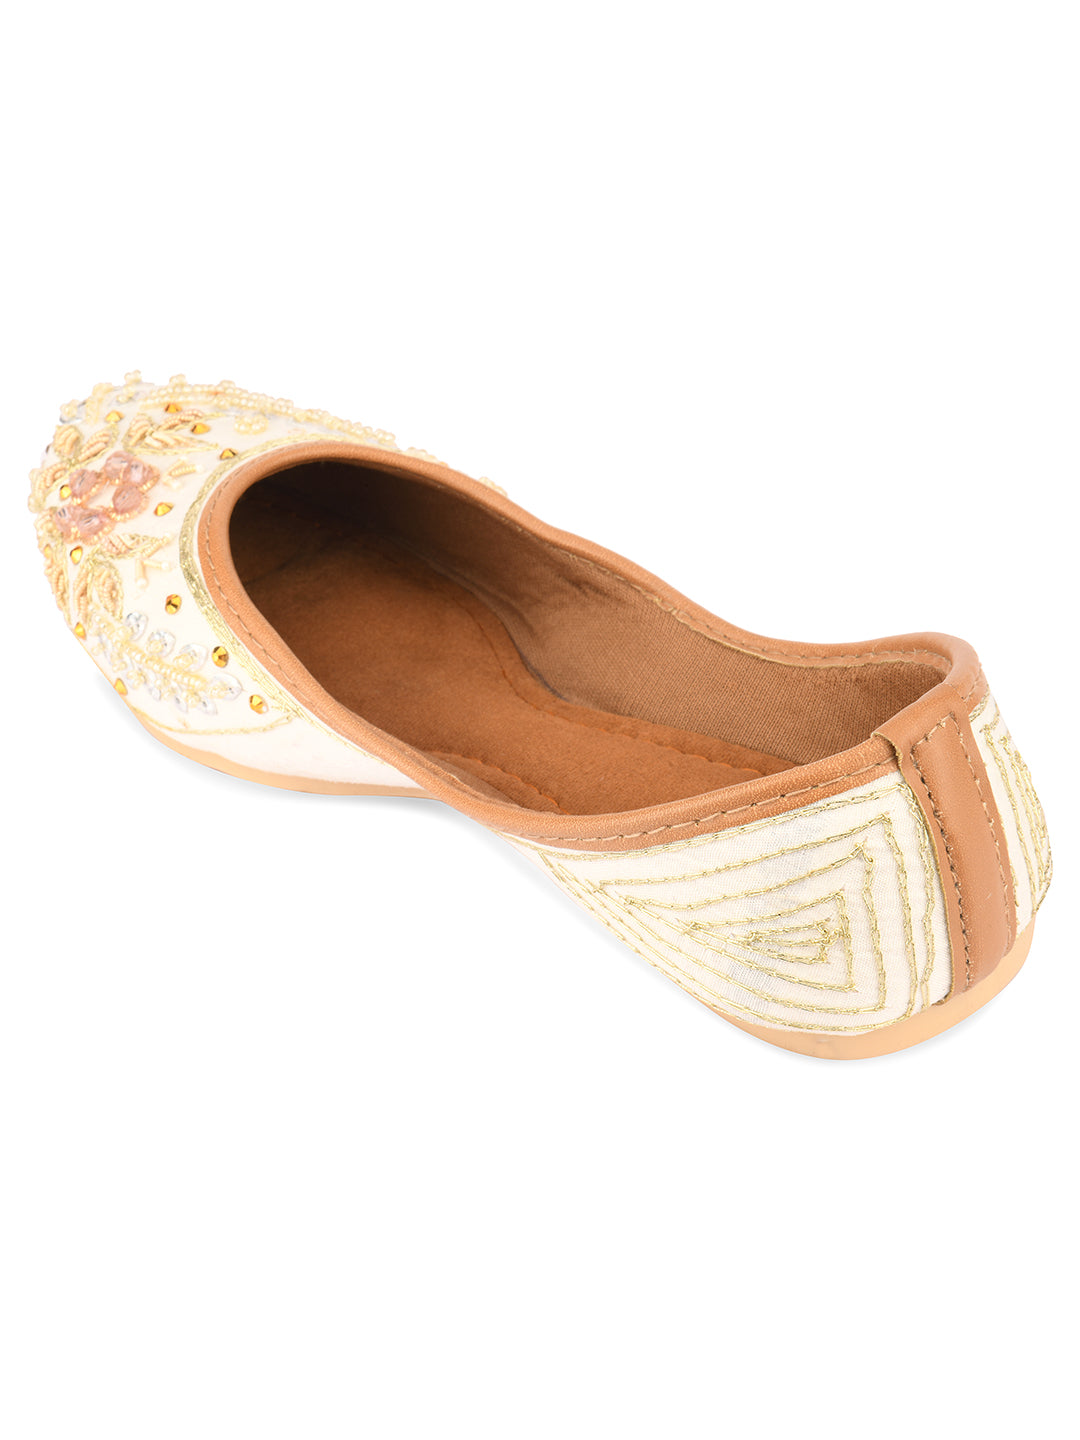 Women's White Dabka Handcrafted   Indian Ethnic Comfort Footwear - Desi Colour